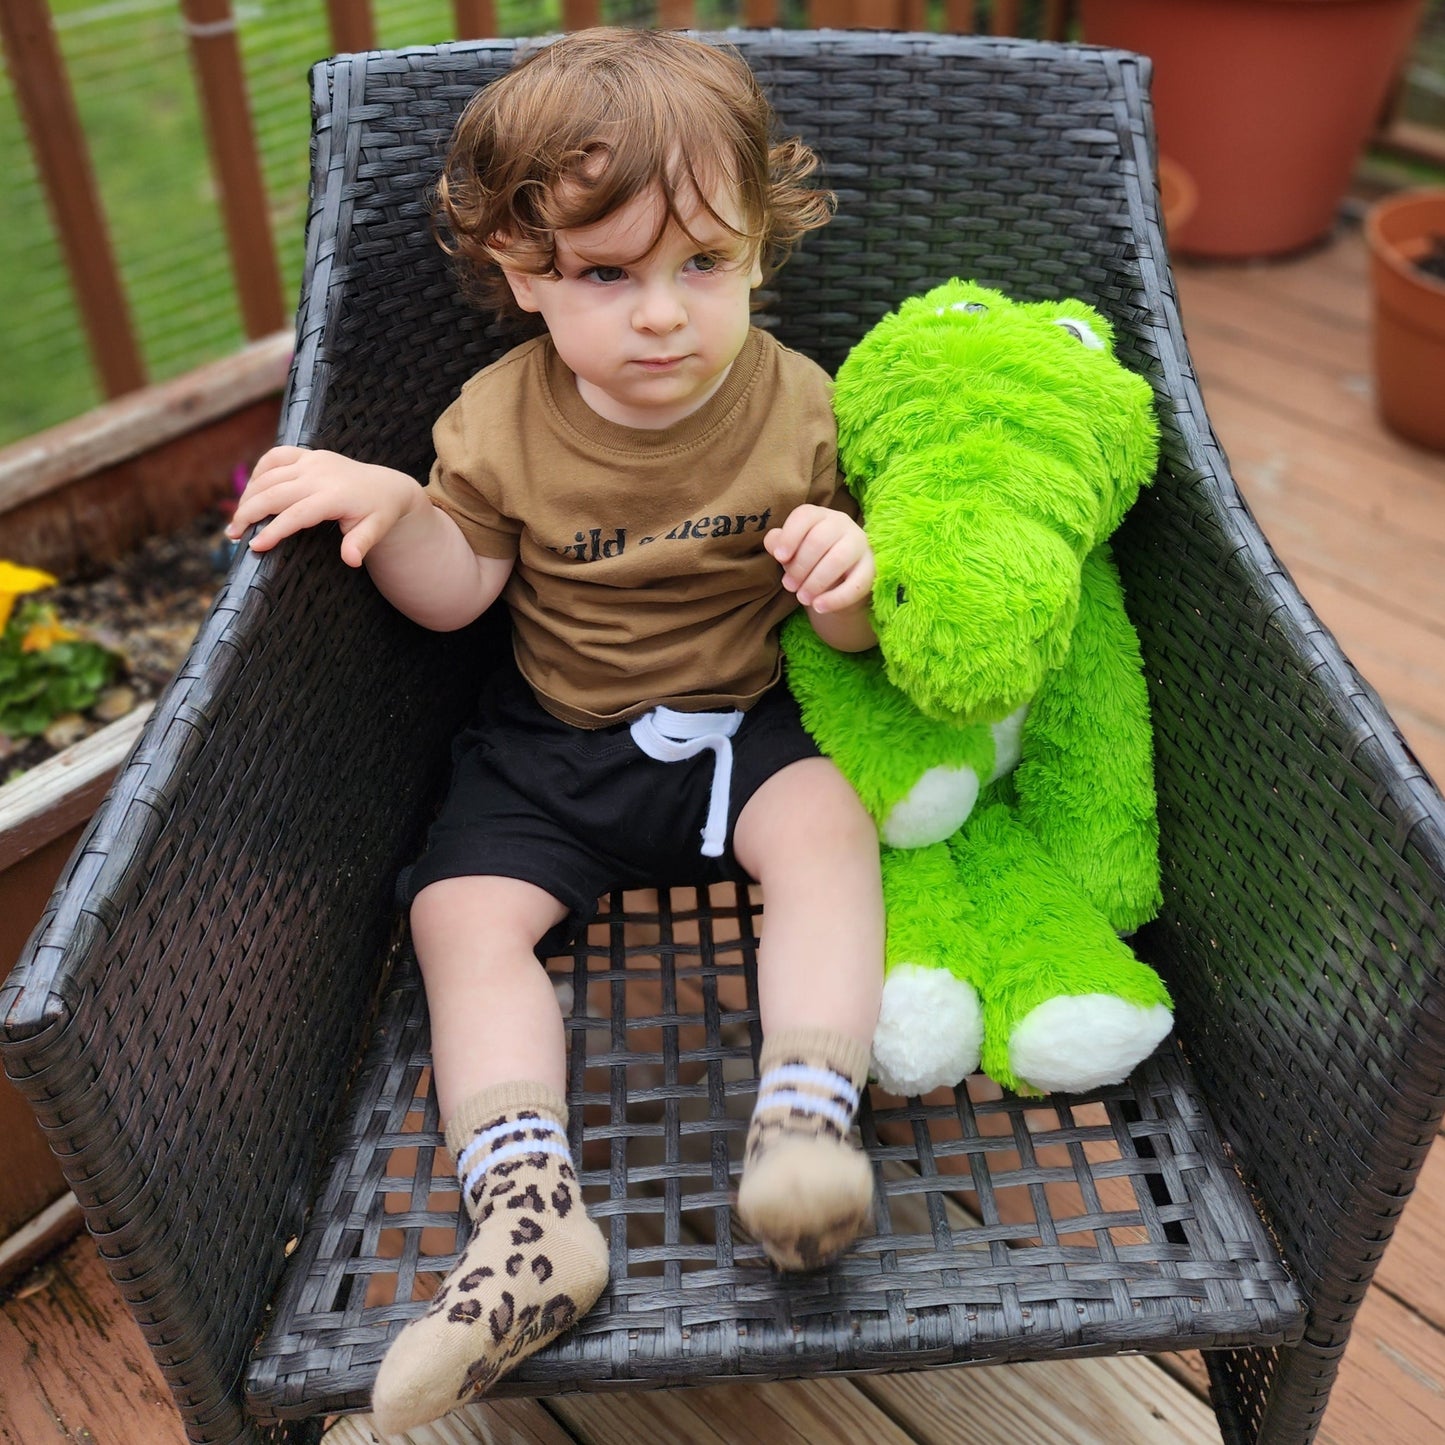 Alligator Stuffed Animal, 24 Inches, Green - MorisMos Plush Toys On Sale